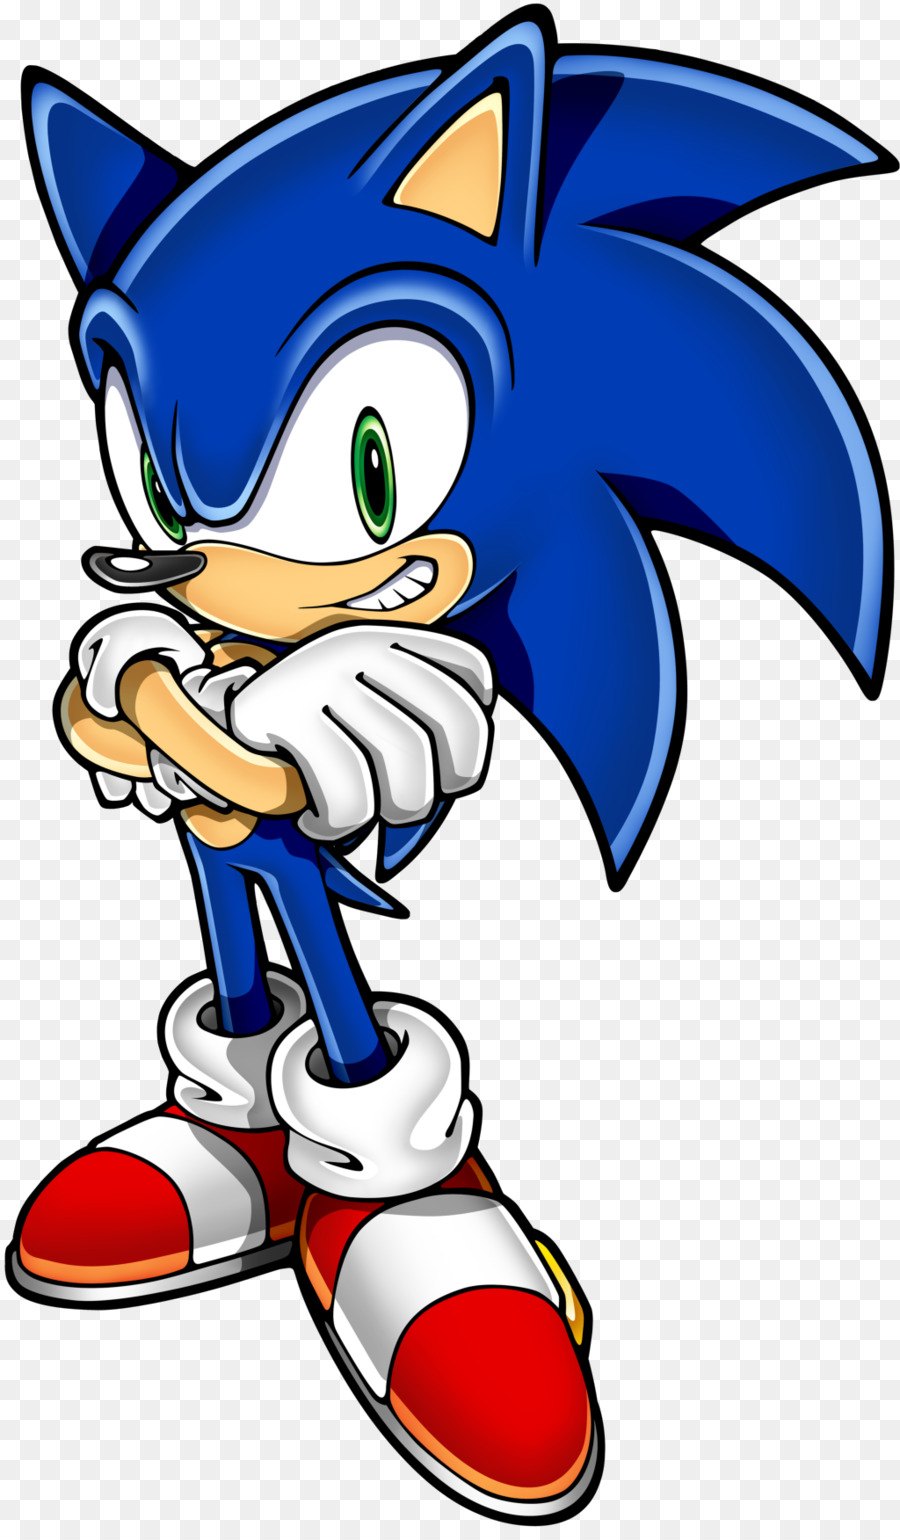 Sonic The Hedgehog clipart - Graphics, Font, transparent clip art